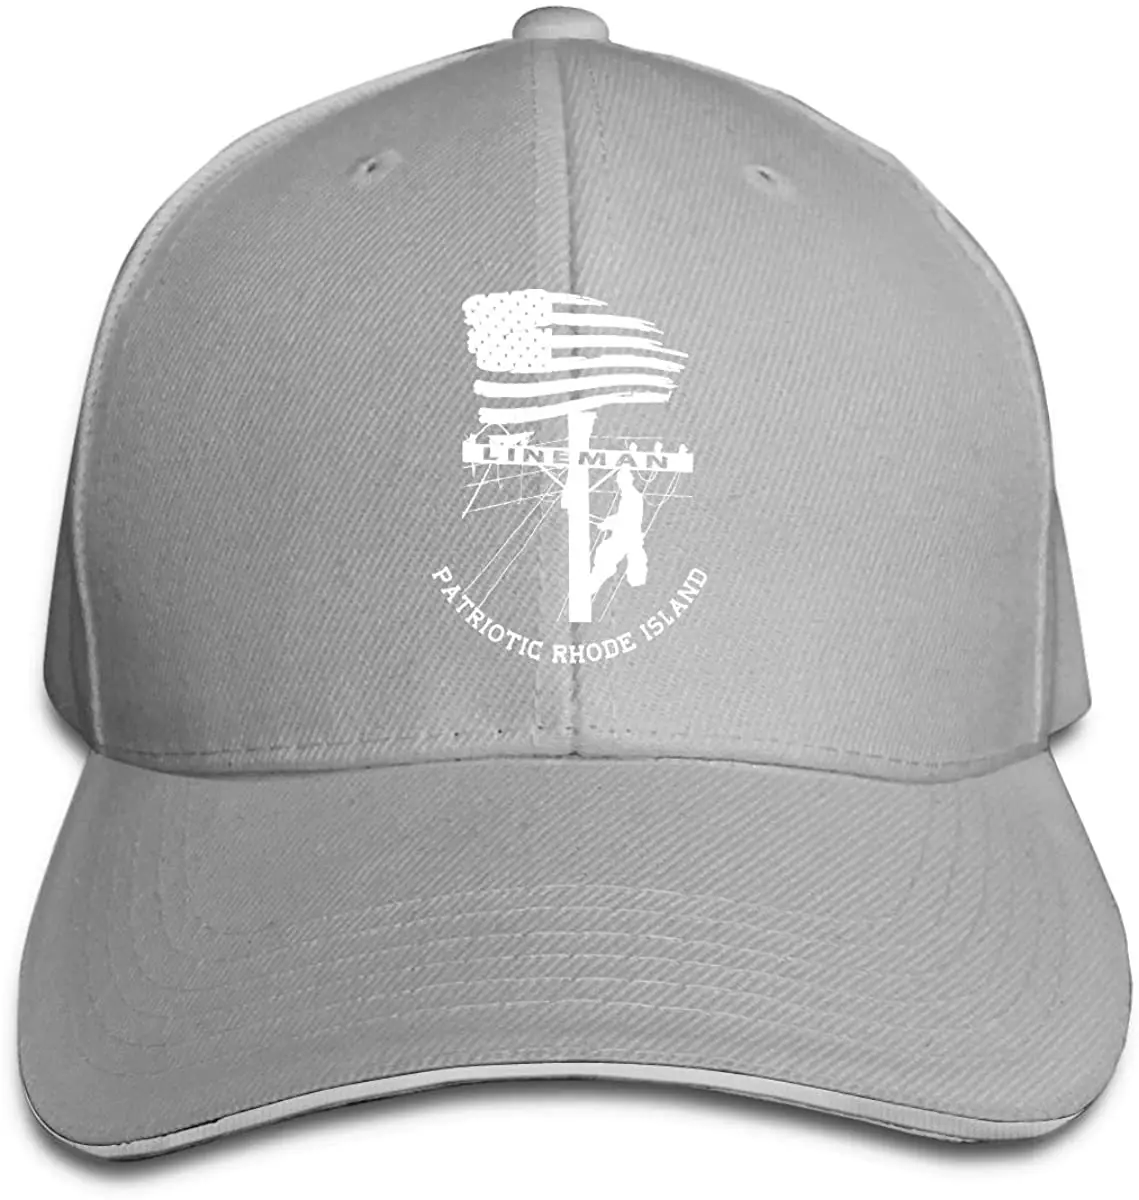 

Patriotic Rhode Island Power Pole Electric Cable Lineman Unisex Hats Trucker Hats Dad Baseball Hats Driver Cap